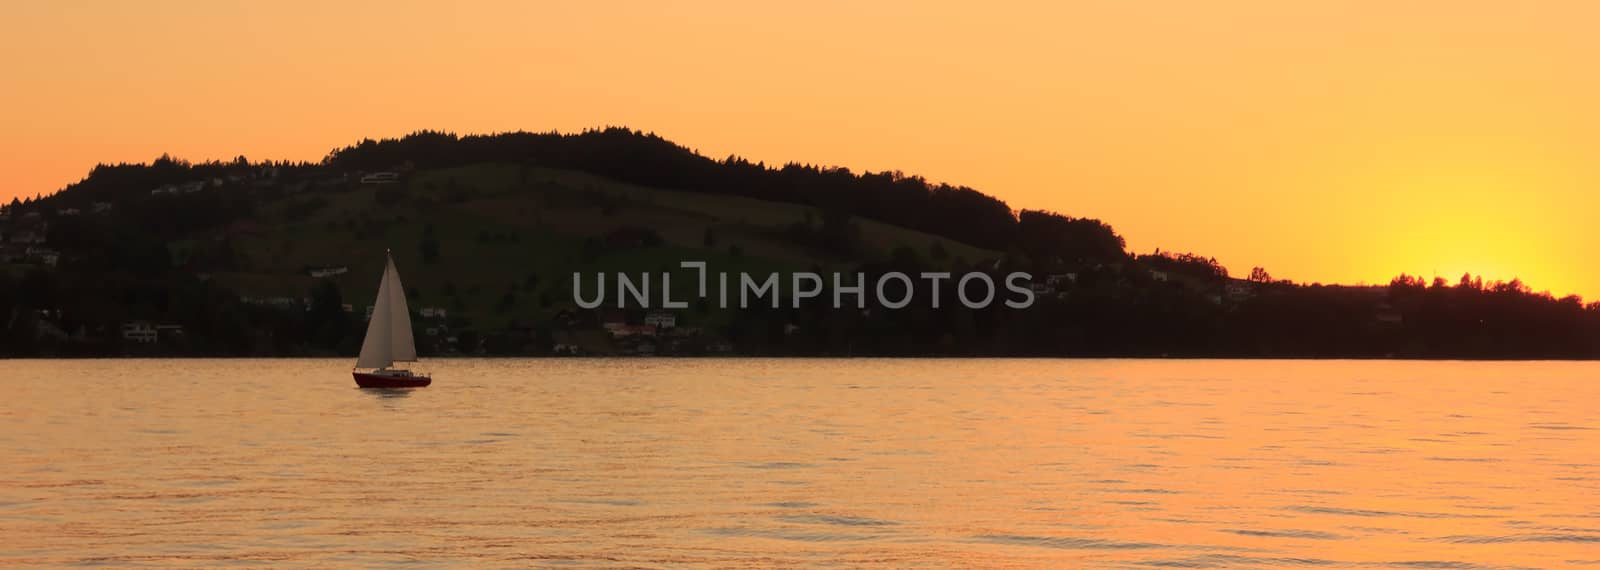 Sailing yacht at sunset on the beautiful Lucerne lake, Switzerland